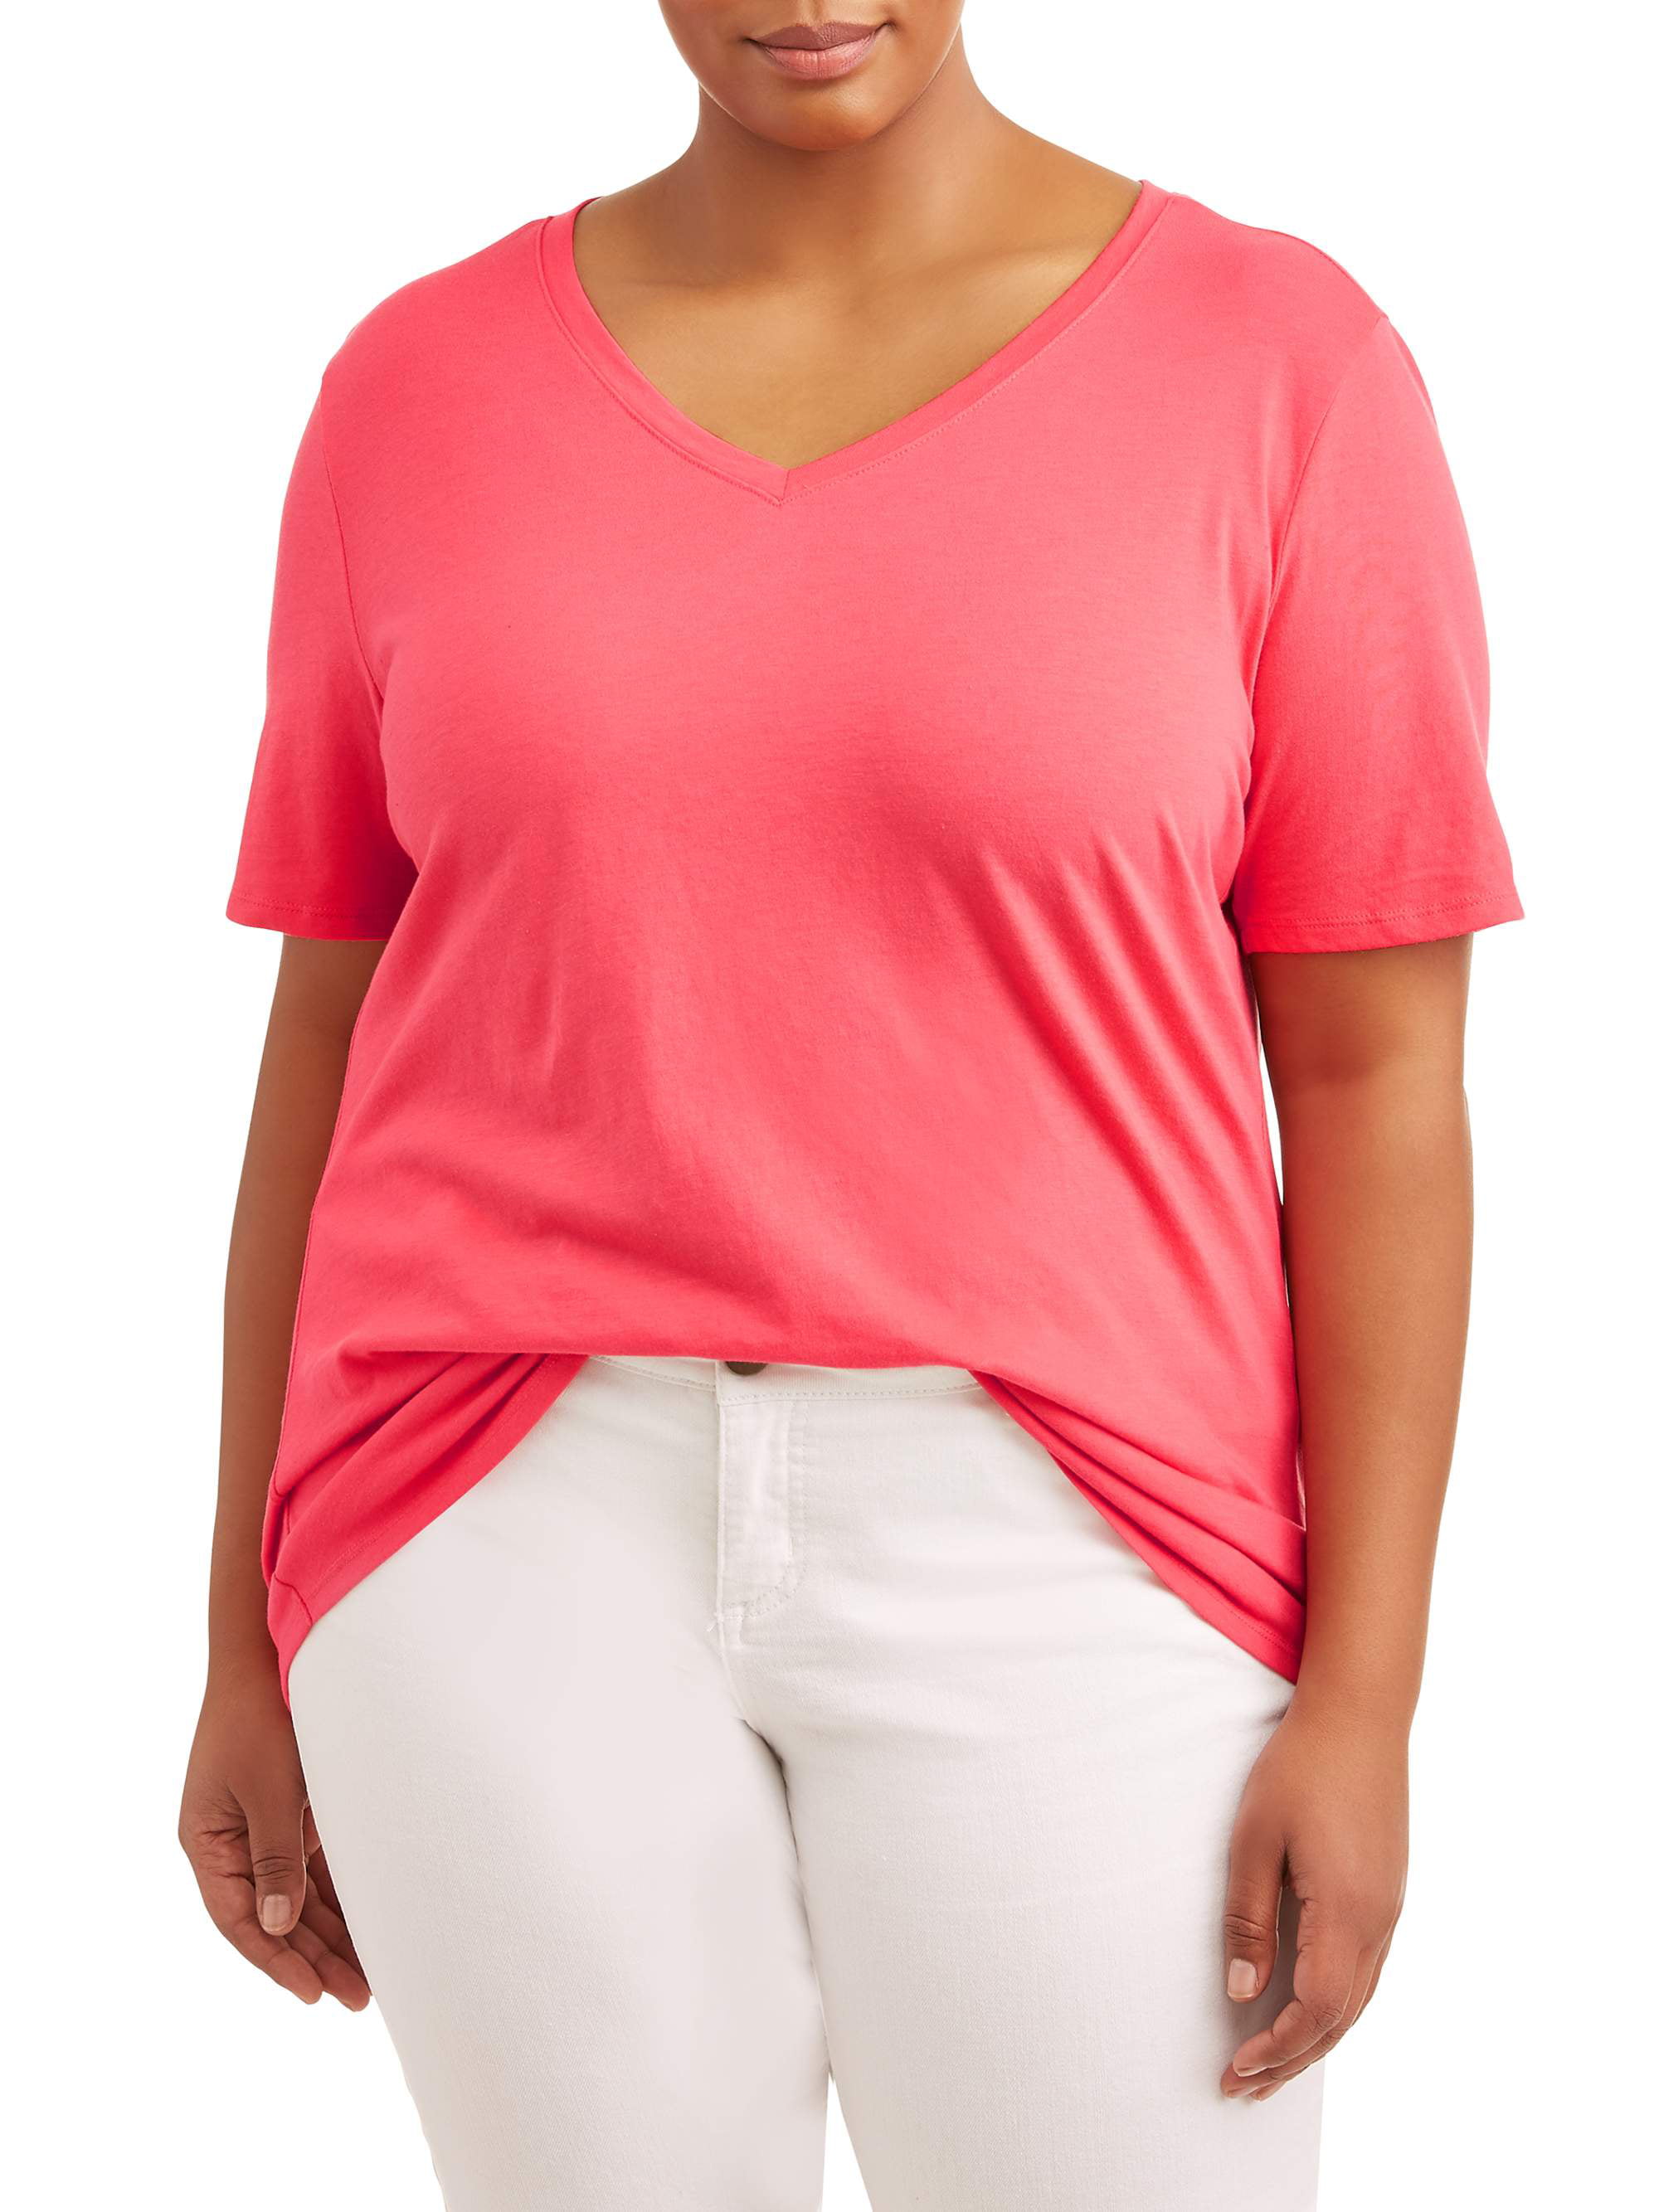 Terra & Sky Women’s T.shirt Grey Size 5X 32W-34W 100% Cotton Short Sleeves New